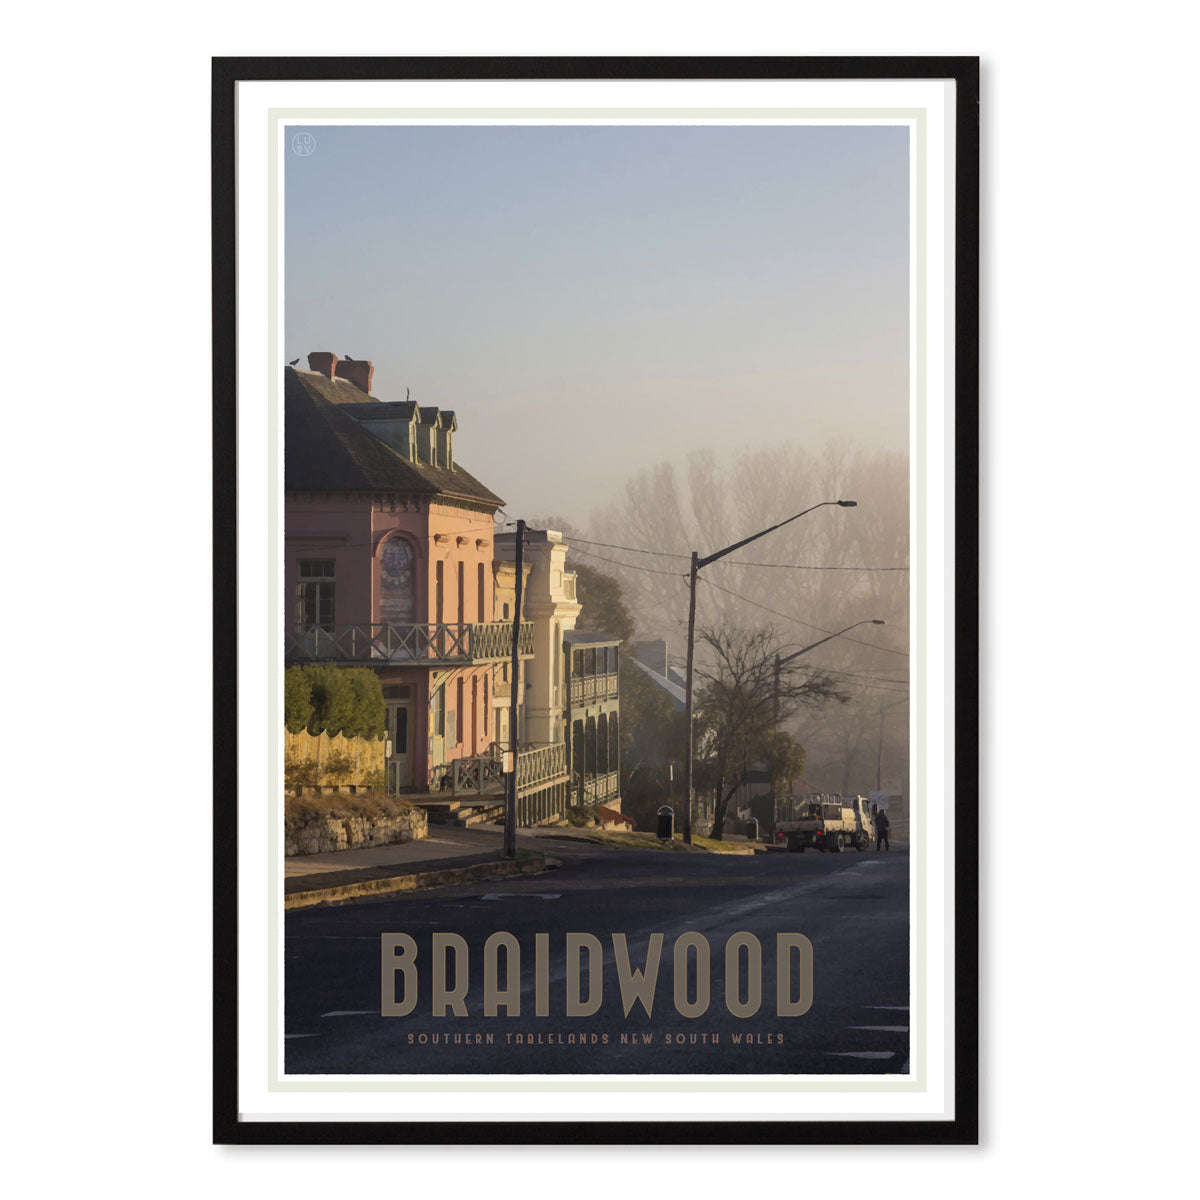 Braidwood Street black framed vintage travel style poster. Original design Places We Luv